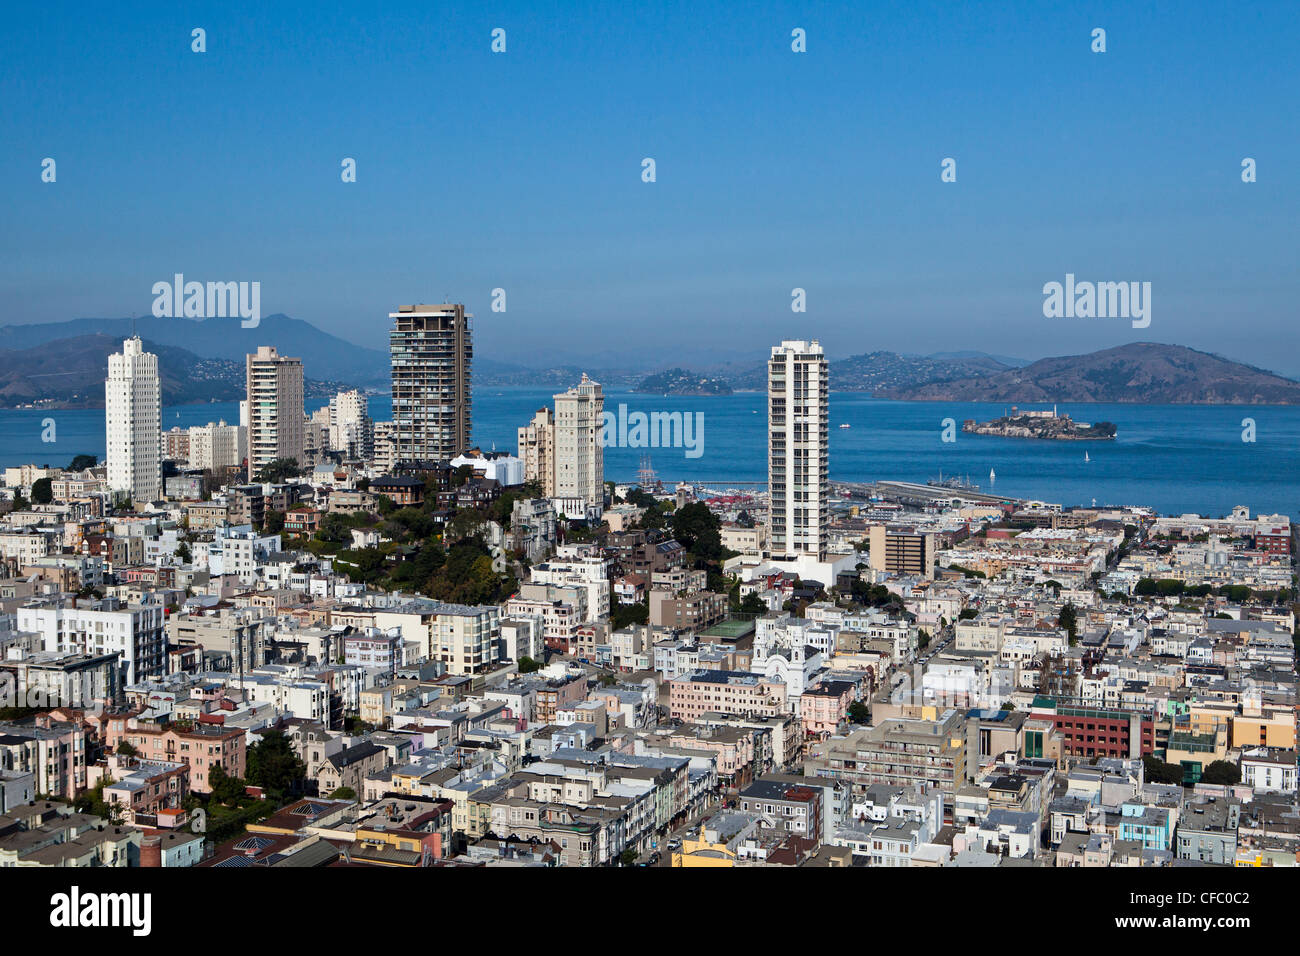 USA, USA, Amerika, Kalifornien, San Francisco, Stadt, Russian Hill, Alcatraz, Insel, Bucht, Hügel, Insel, Skyline, skyscr Stockfoto